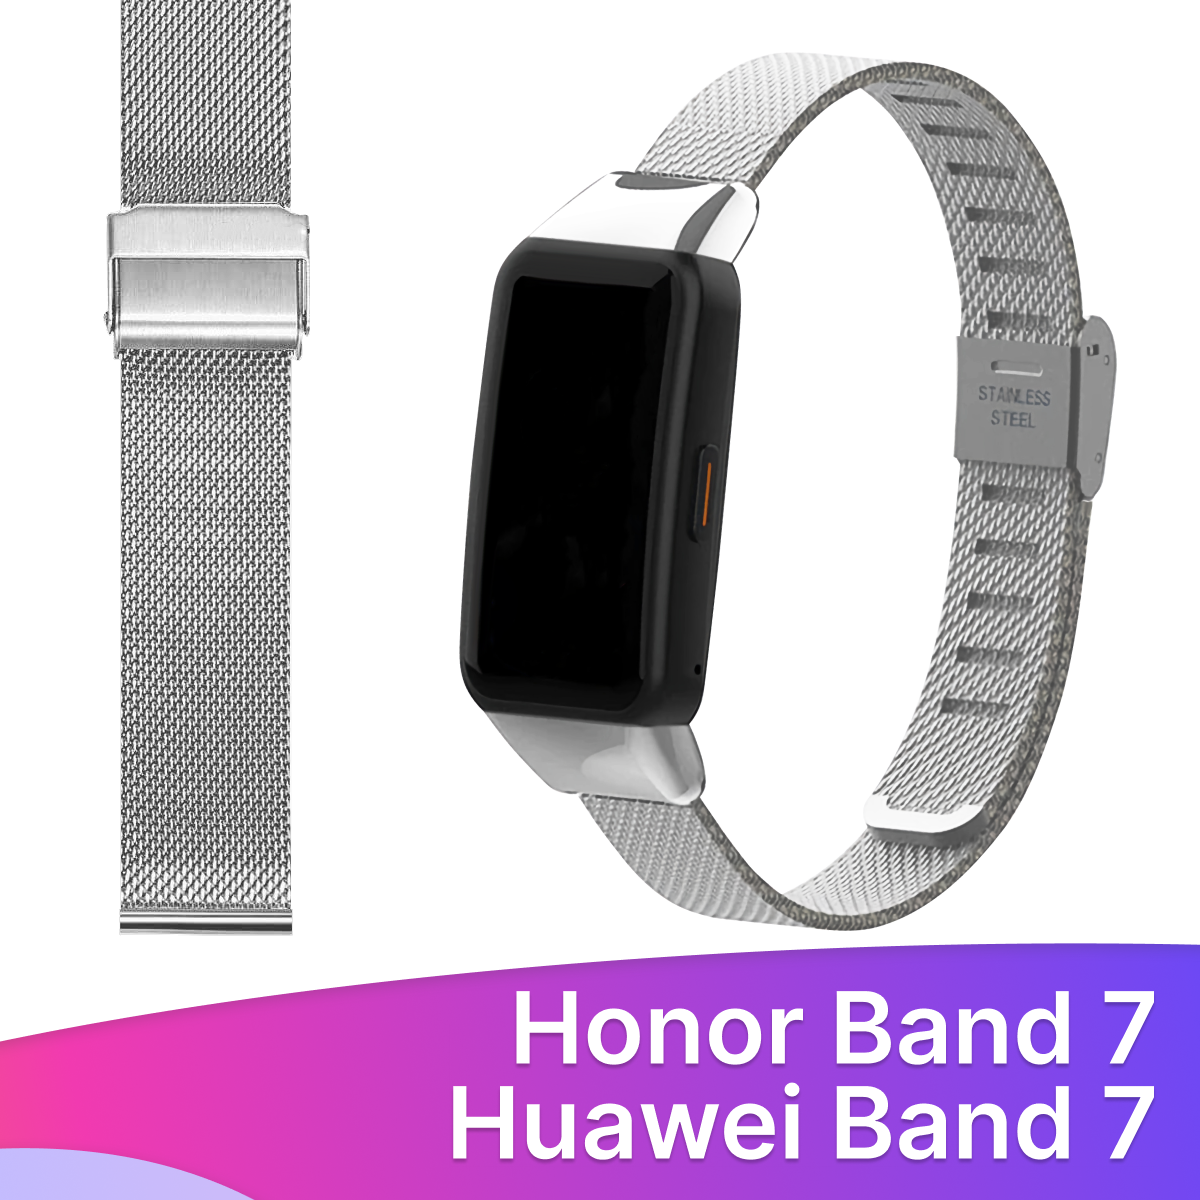 Металлический ремешок для фитнес-браслета Huawei Band 7 и Honor Band 7 / Браслет миланская петля на смарт часы Хуавей Бэнд 7 и Хонор Бэнд 7 / Серебро